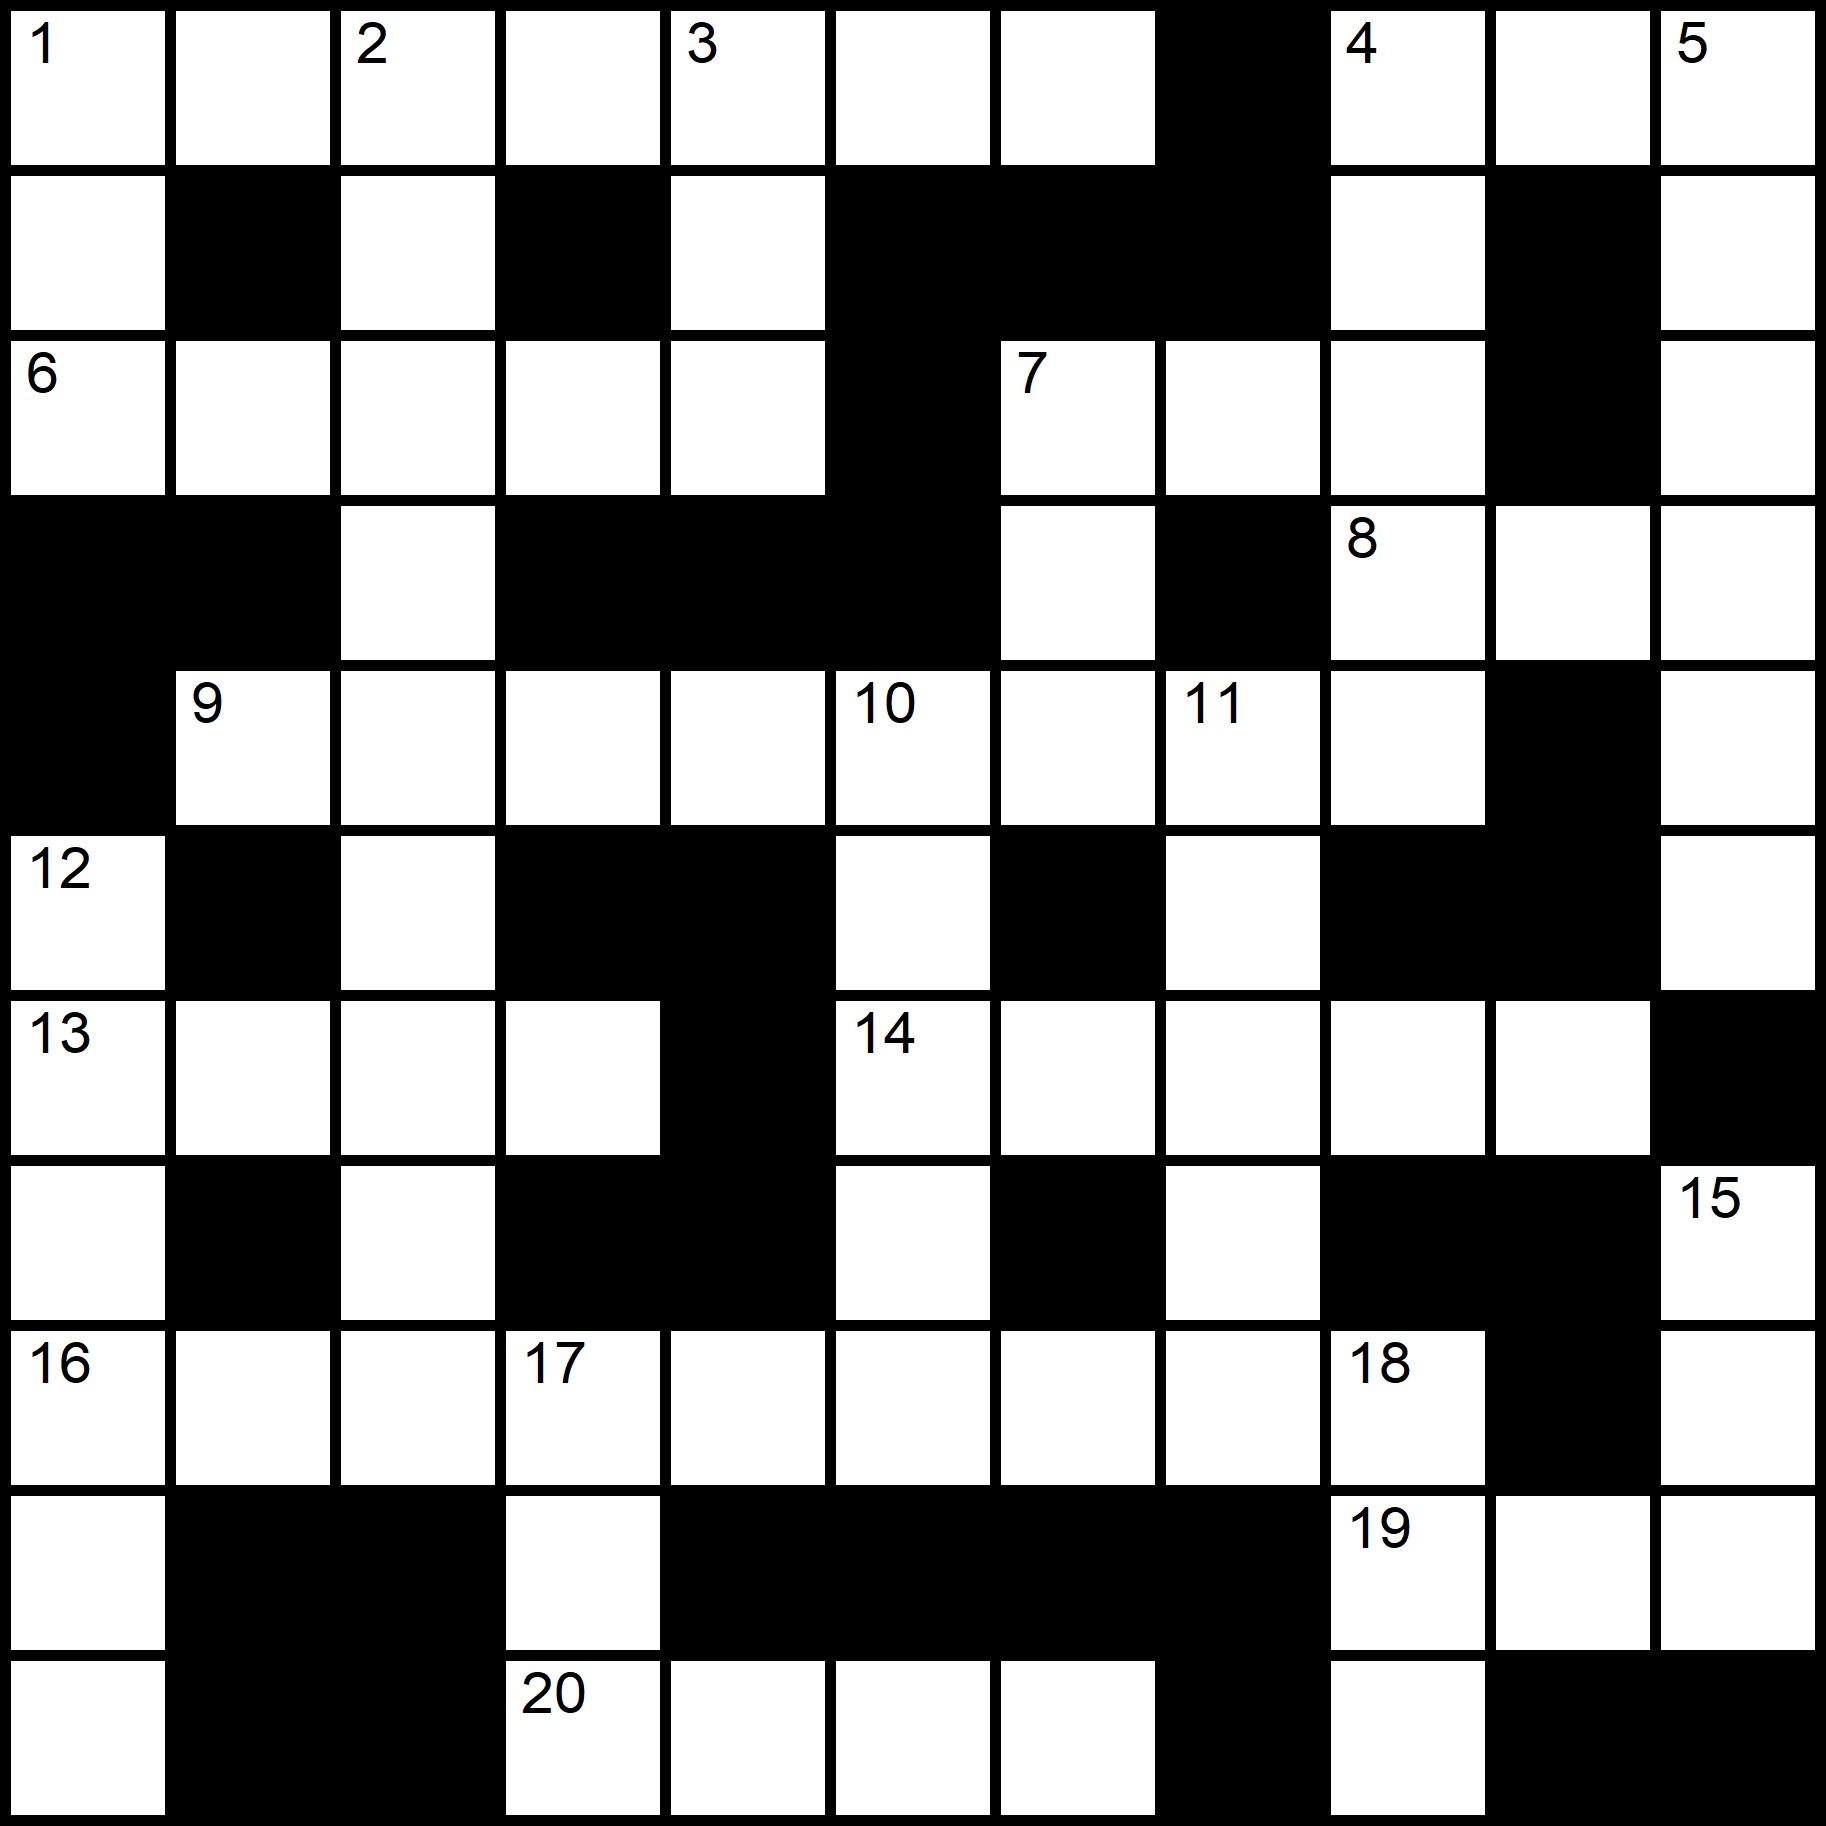 Easy Crossword Puzzle Printable -
Placidus Flora - Crossword number three